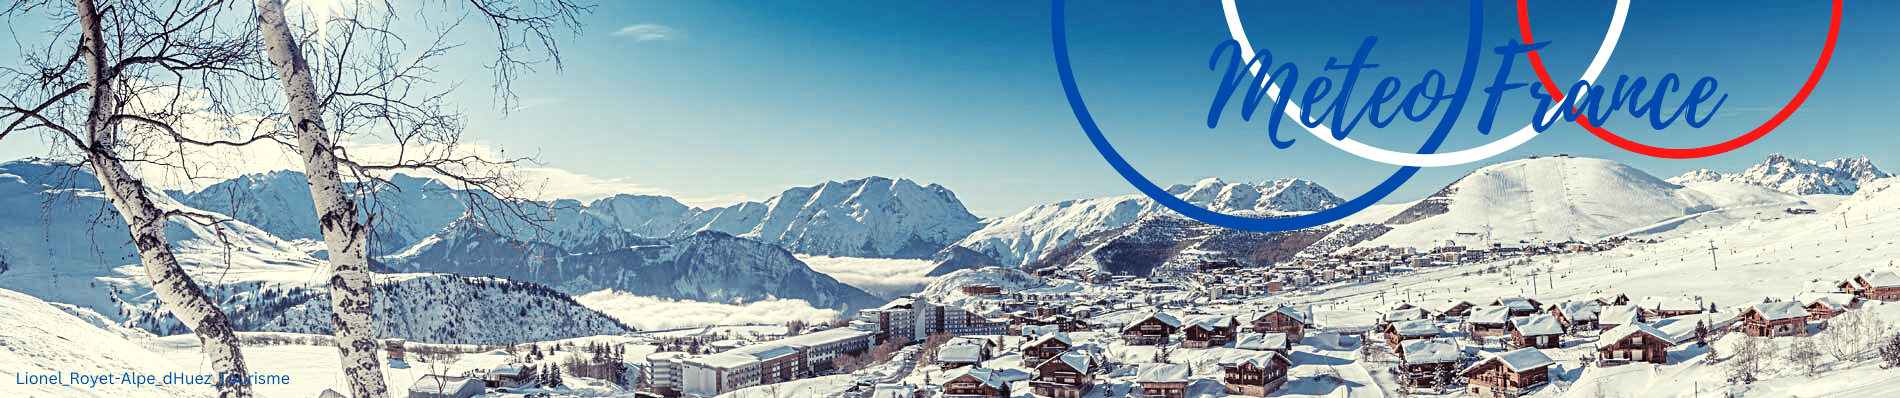 METEO FRANCE ski hoogte sneeuw bericht wintersport